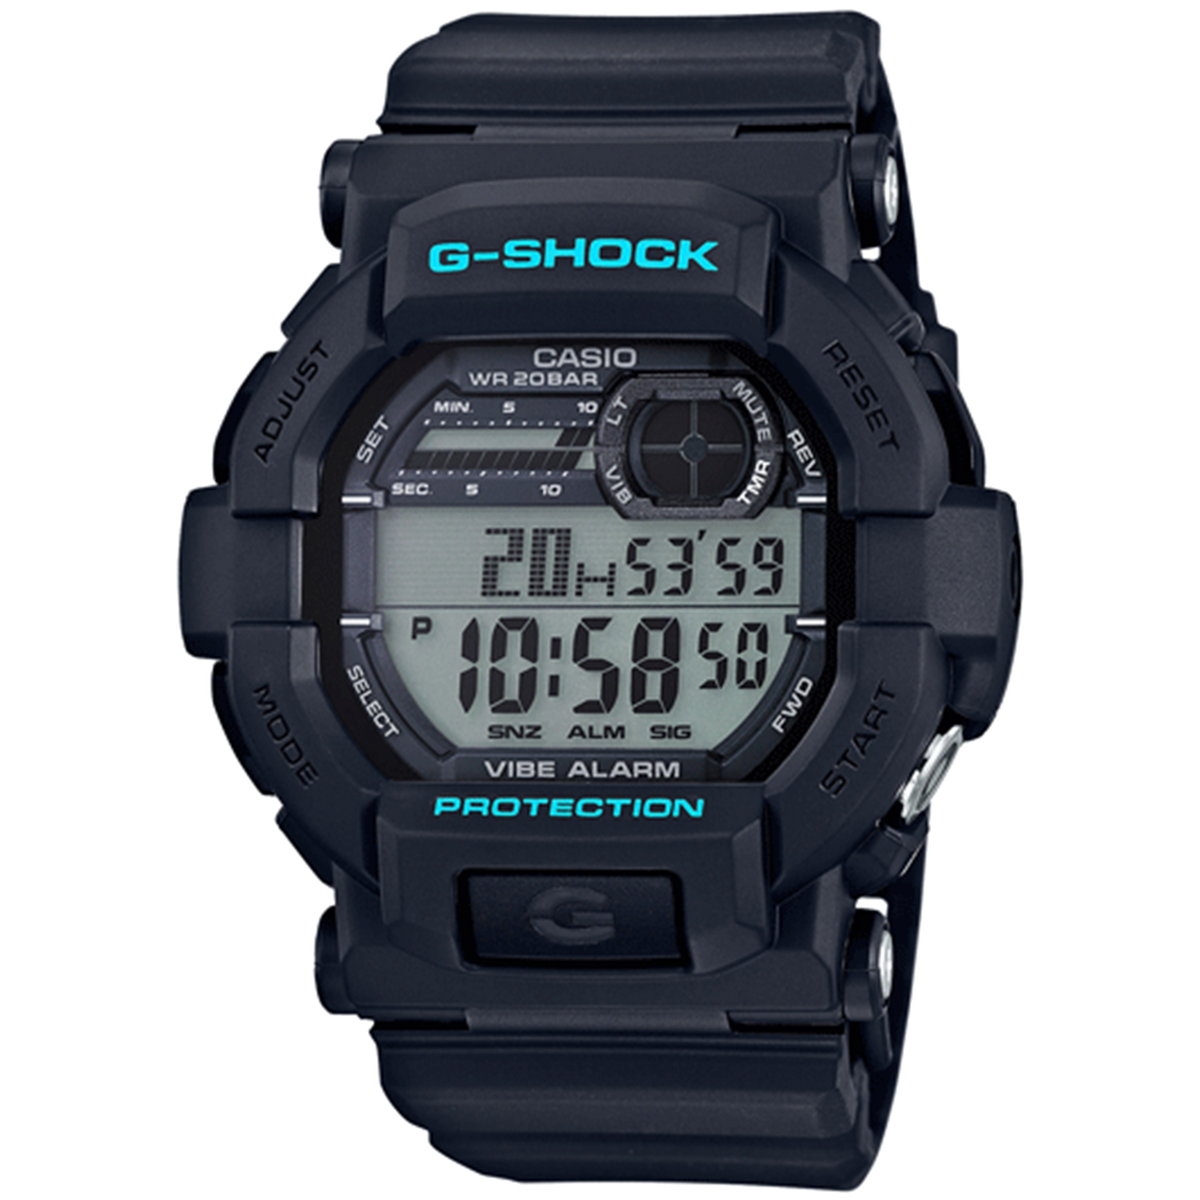 Casio G-Shock - Vibration Alarm